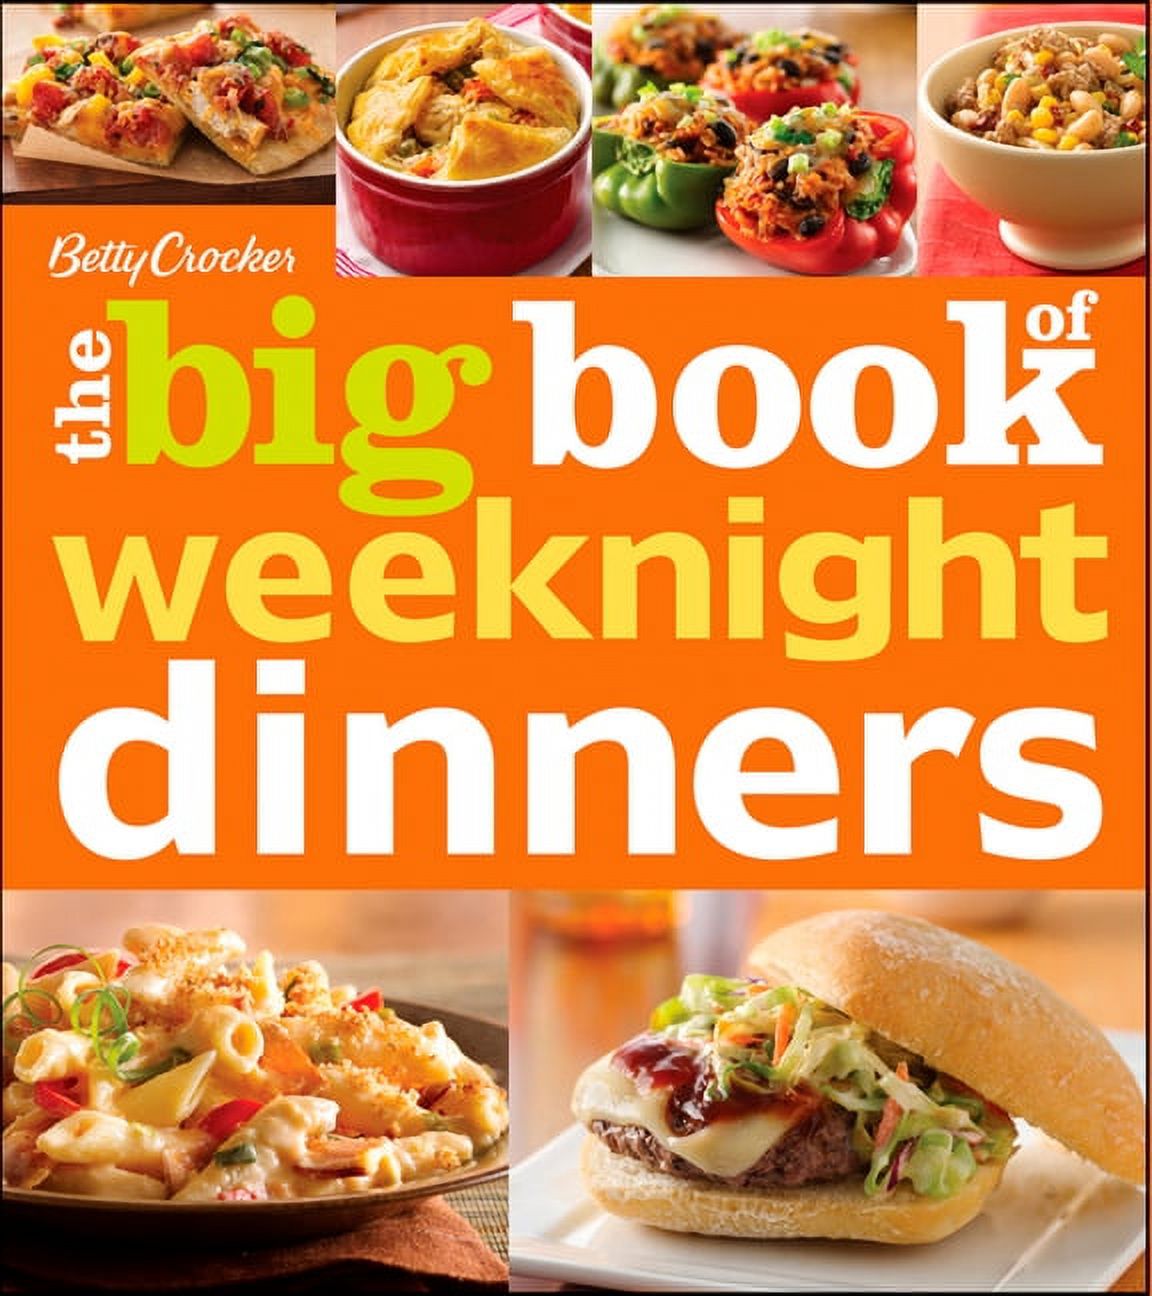 Betty Crocker Big Book: Betty Crocker the Big Book of Weeknight Dinners (Paperback) - image 1 of 2